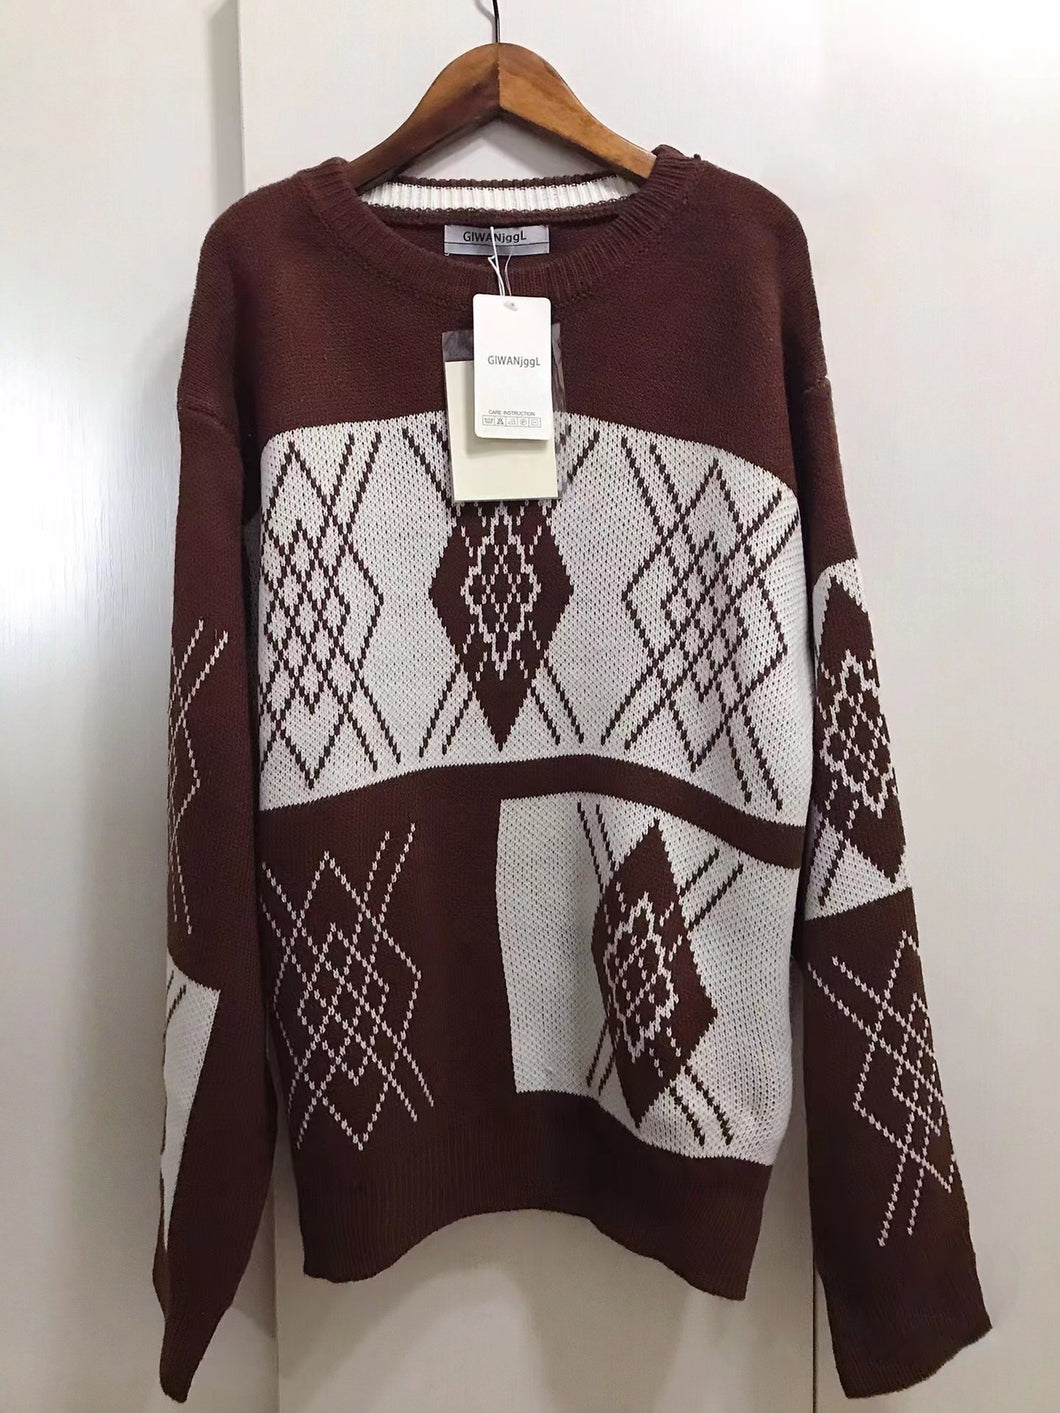 GlWANjggL Sweaters,Men's Long-Sleeve Crewneck Sweater